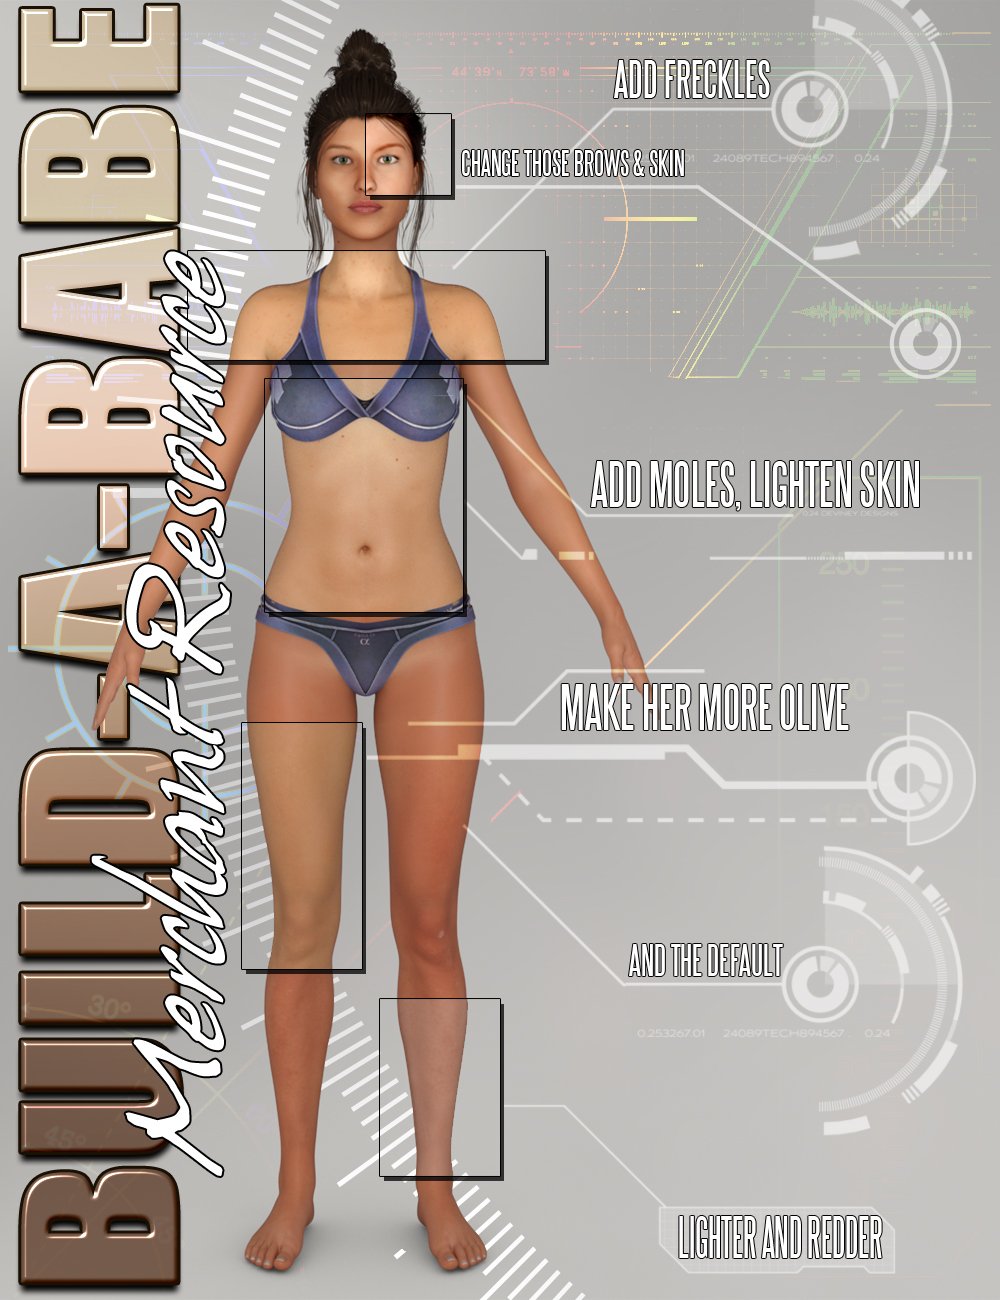 Build-A-Babe Skin Texture Merchant Resource by: SR3, 3D Models by Daz 3D